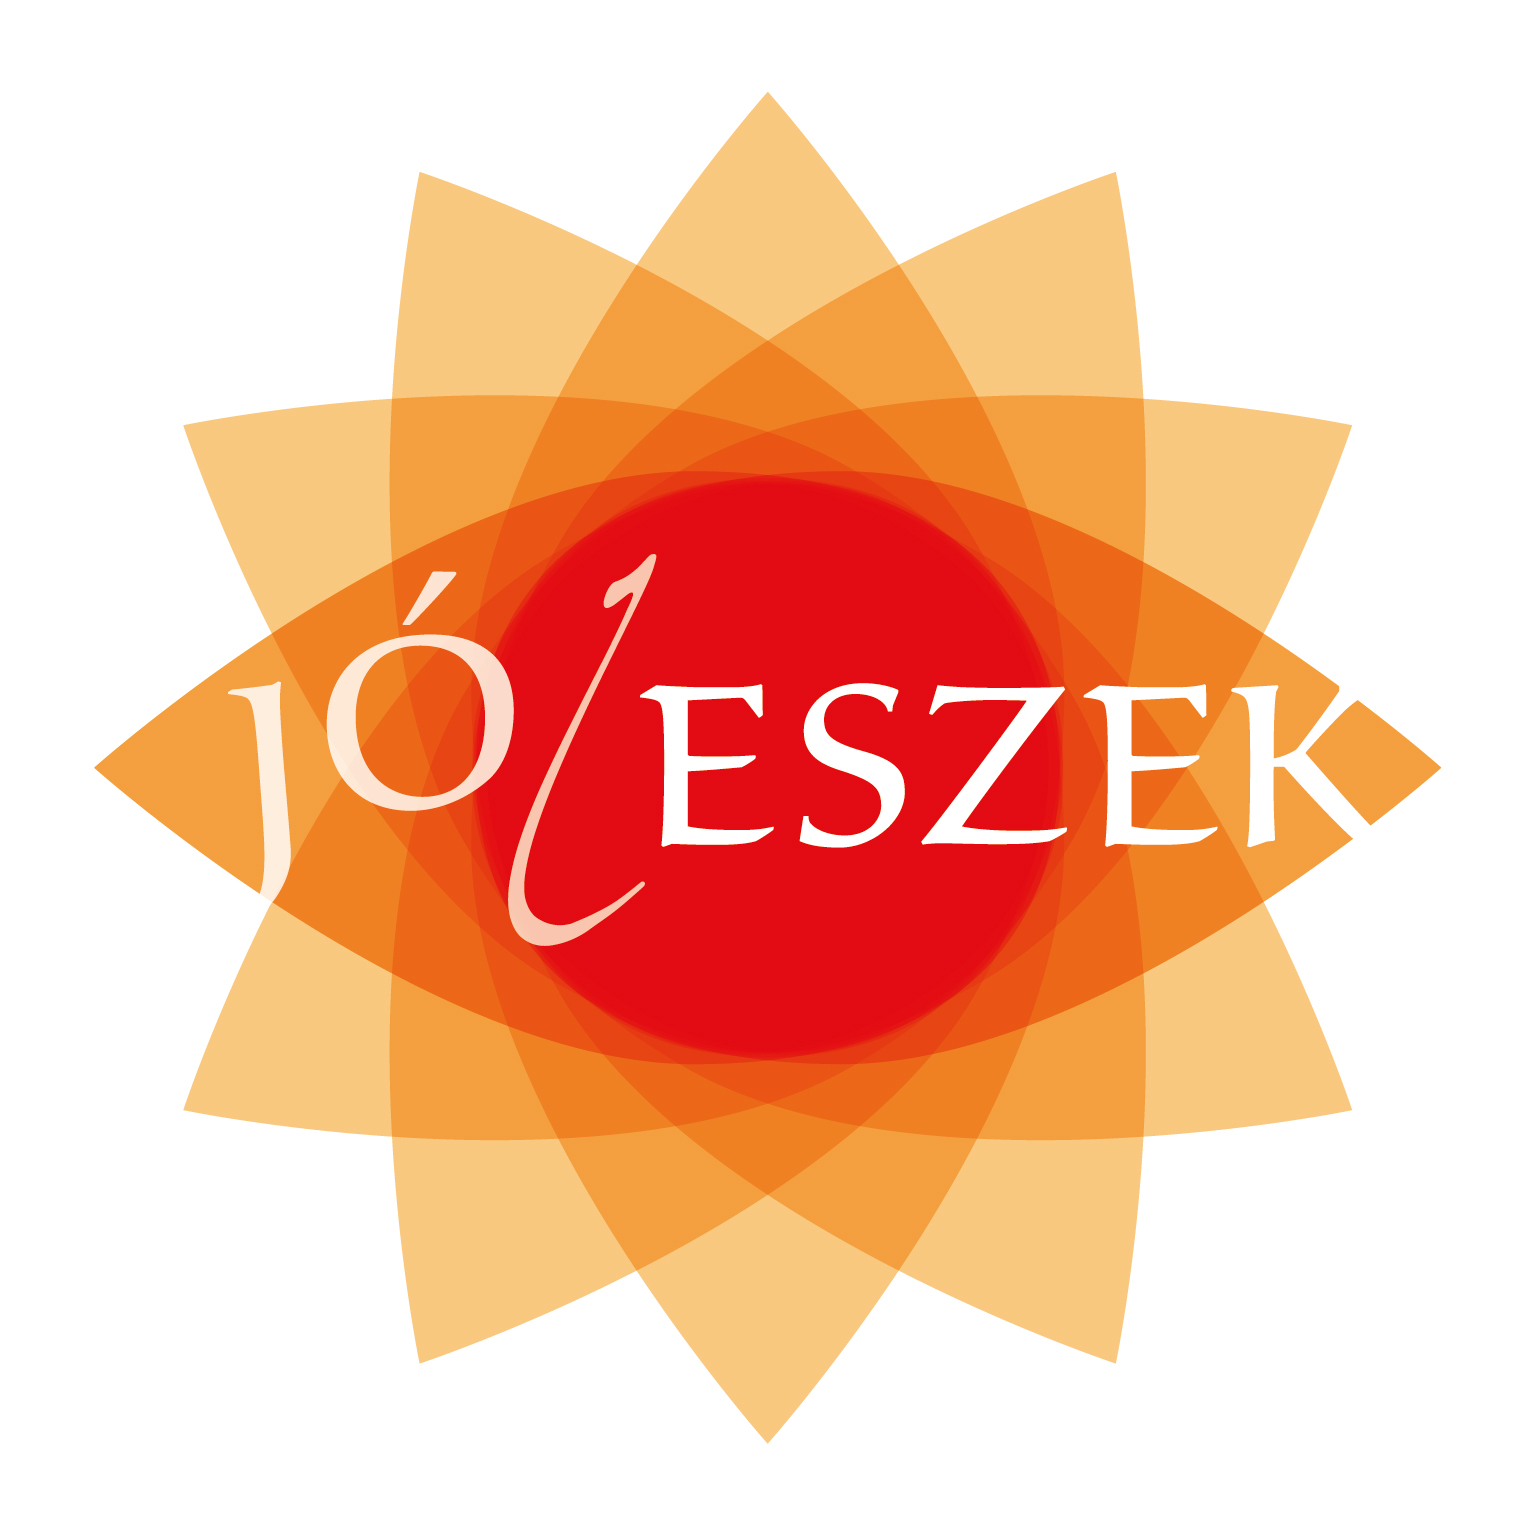 joleszek_logo_OK_0726-01.jpg